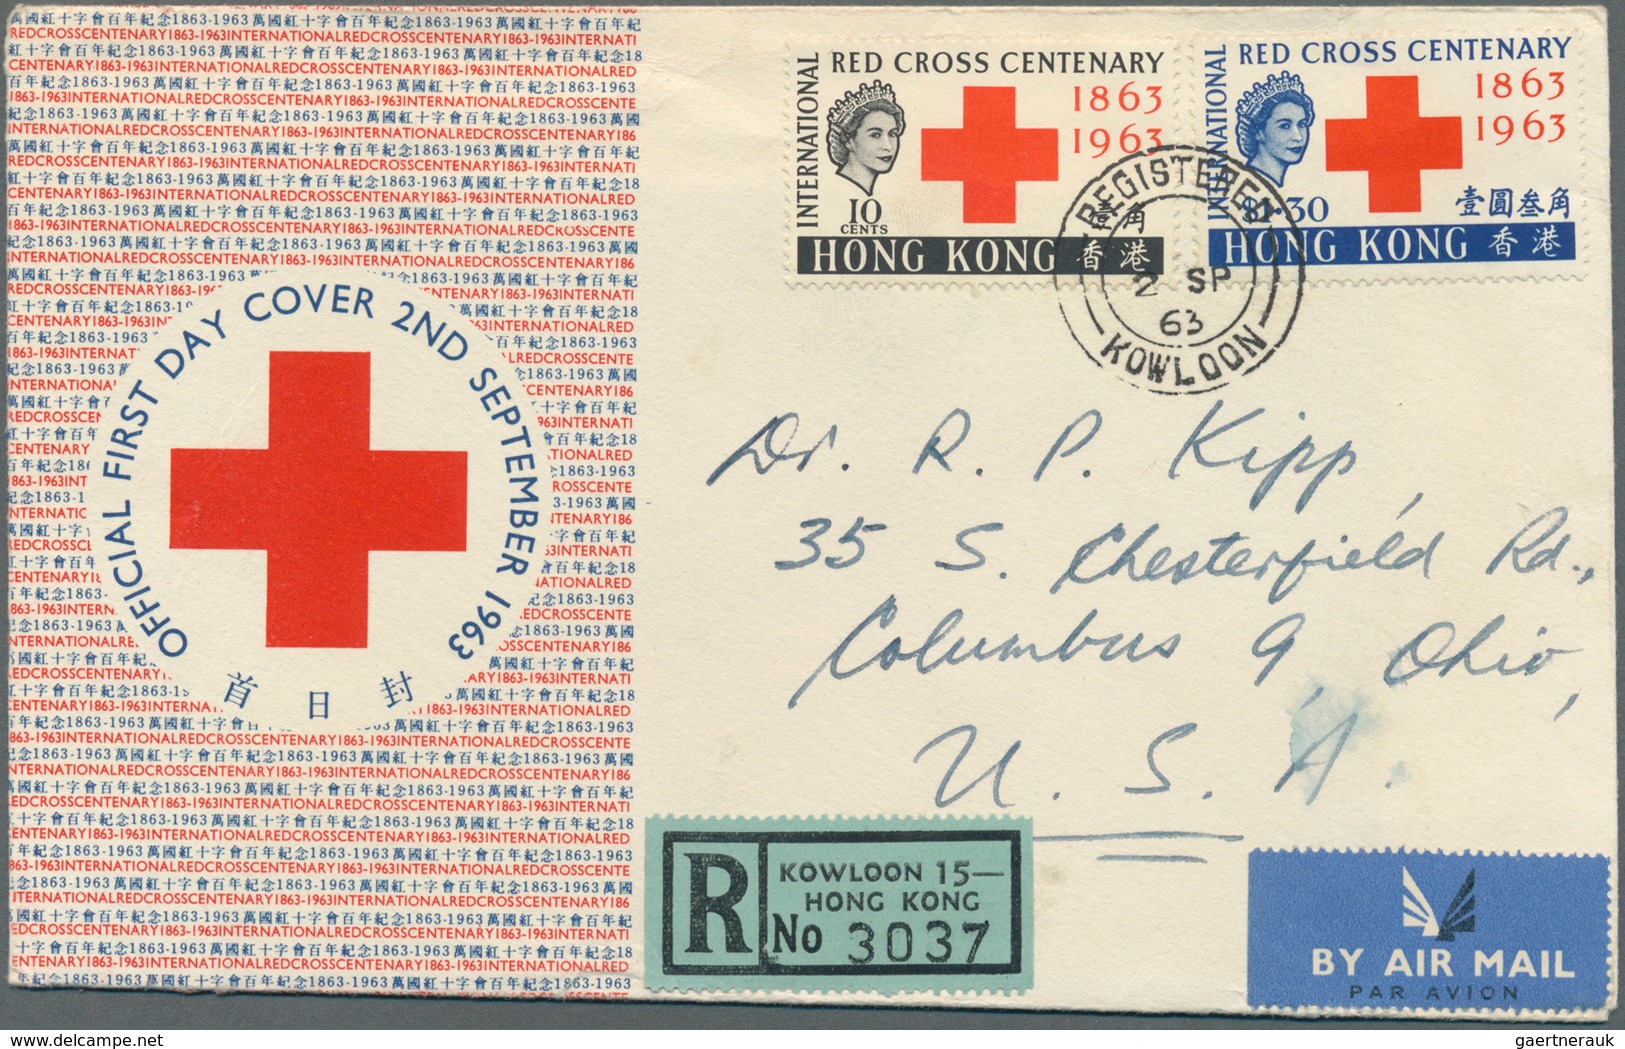 22670 Hongkong: 1910/70, covers (9); 1963/92, FDC (14, inc. 1963 Red Cross, 1967 new year, 1971 new year).